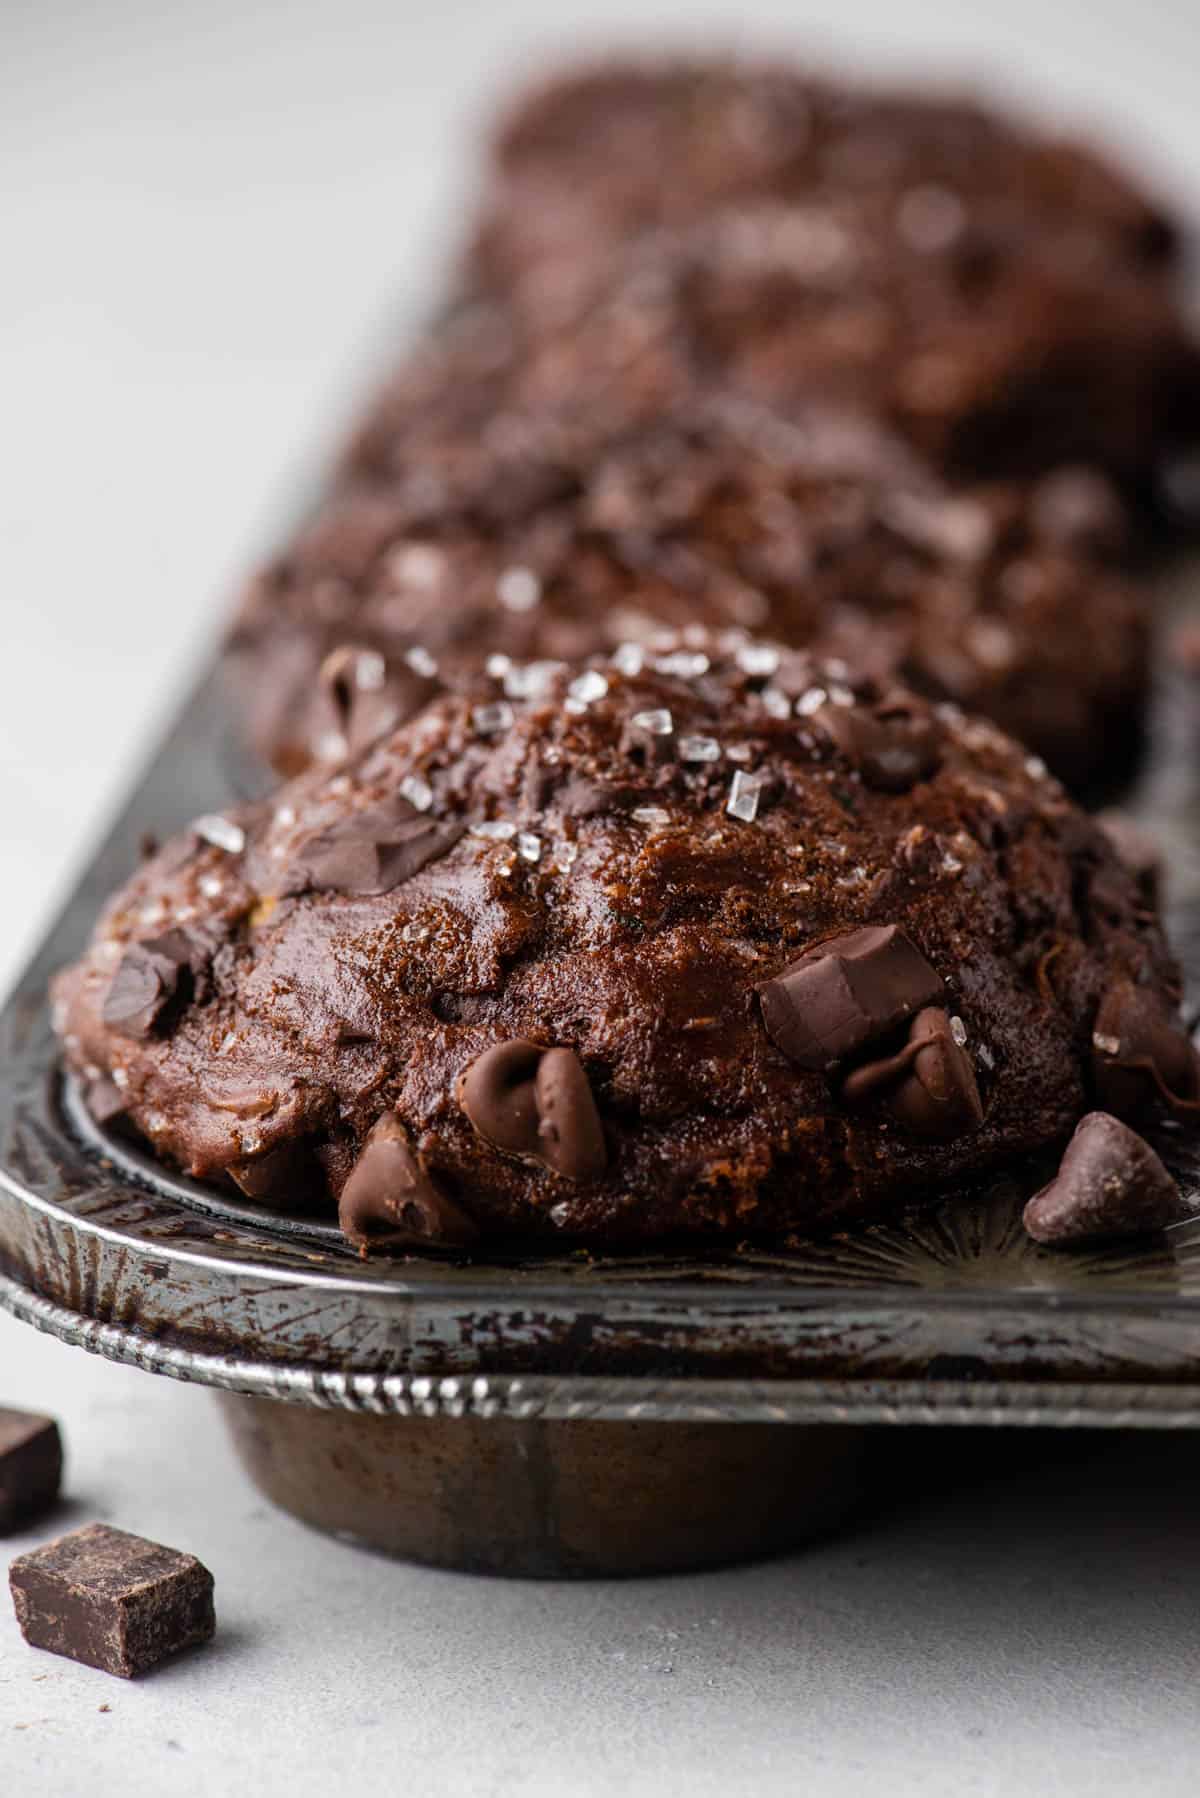 Chocolate zucchini muffins in the muffin pan